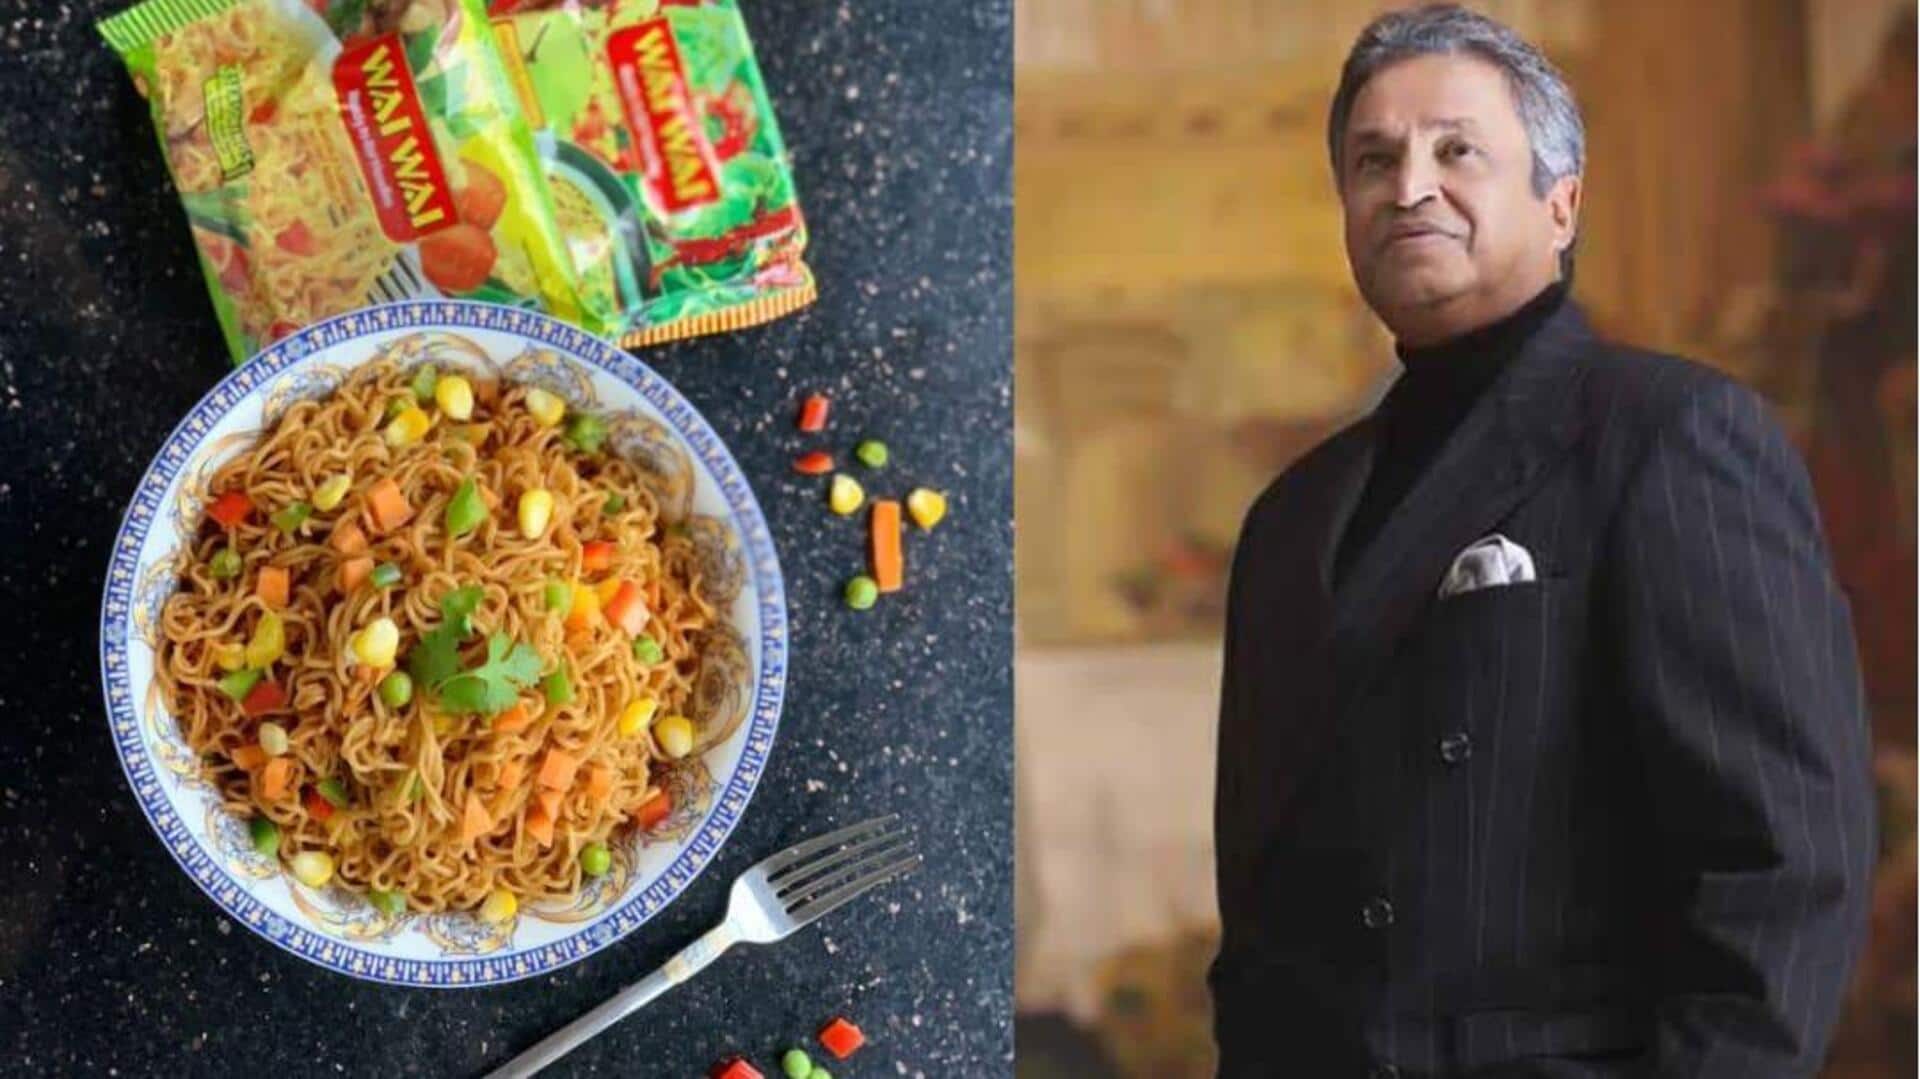 Nepalese billionaire behind Wai Wai noodles plans India unit's IPO